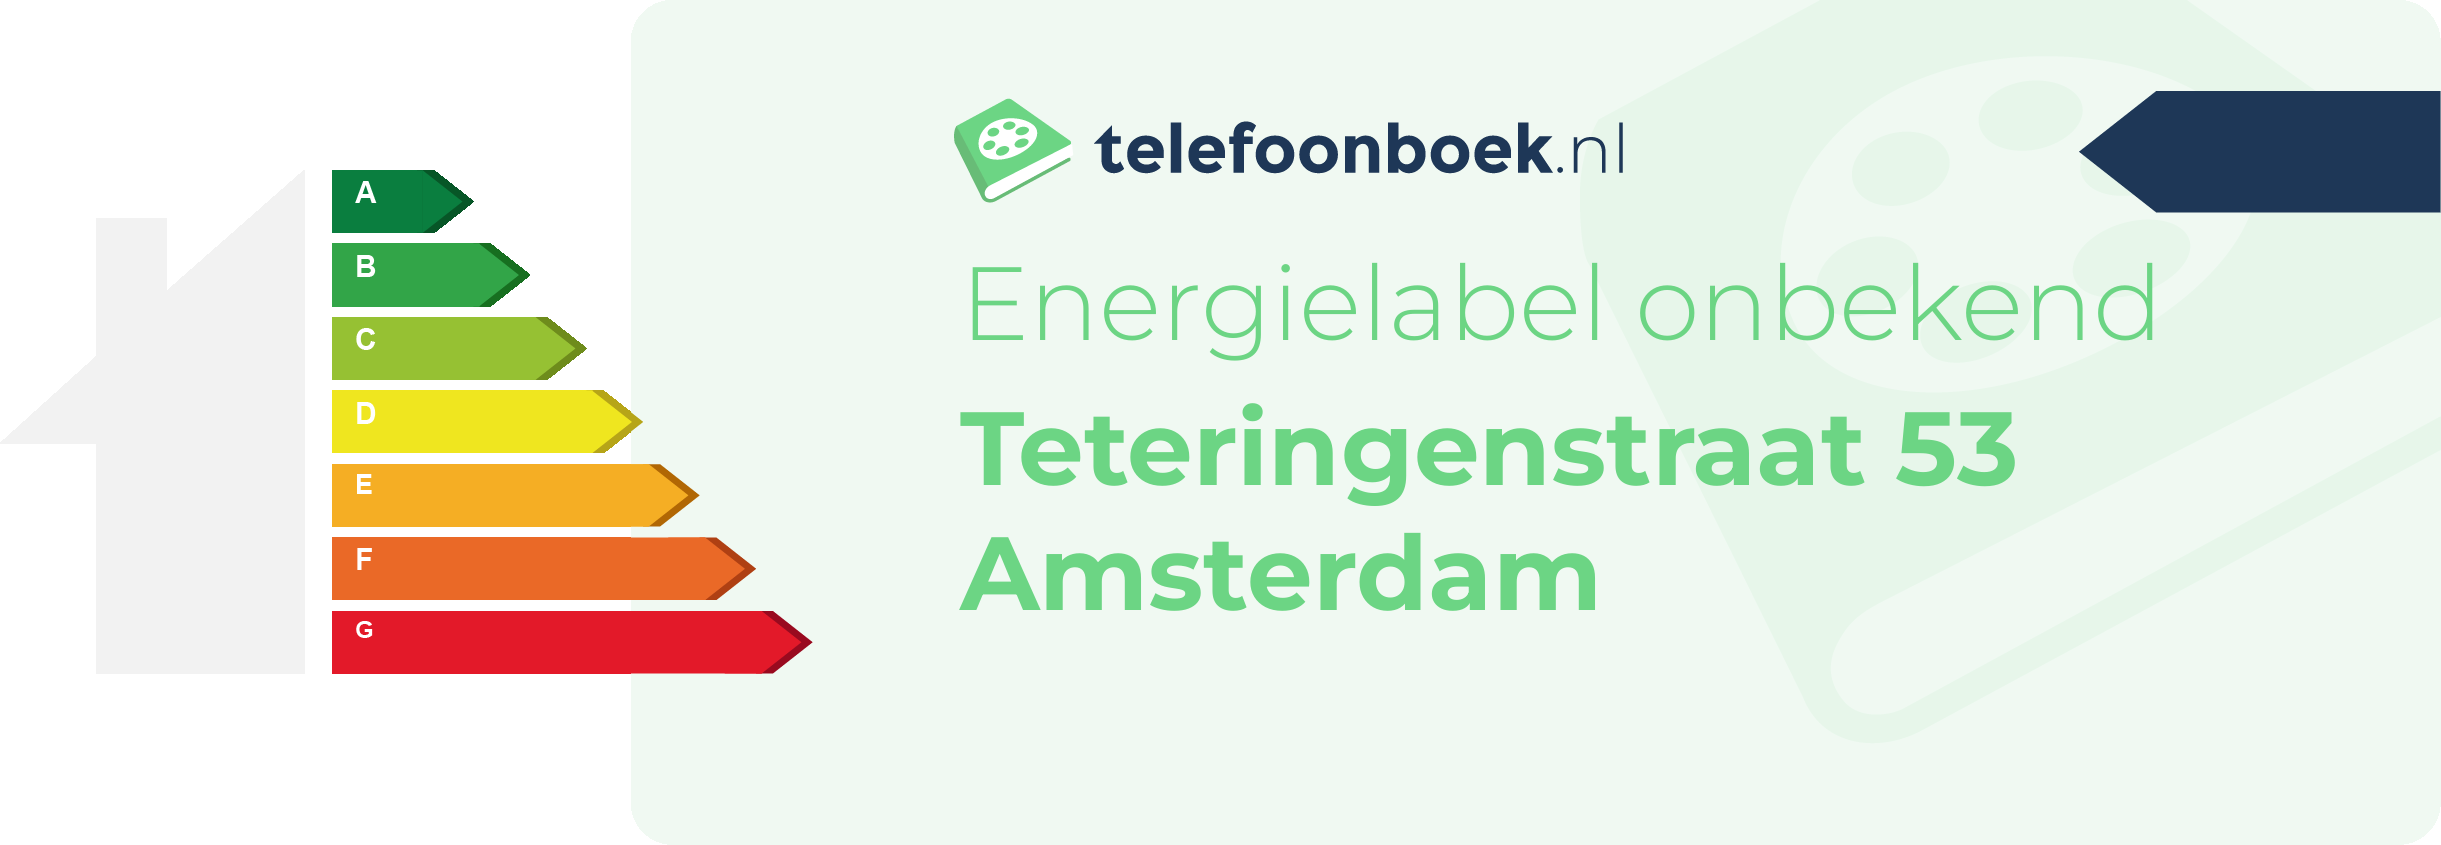 Energielabel Teteringenstraat 53 Amsterdam